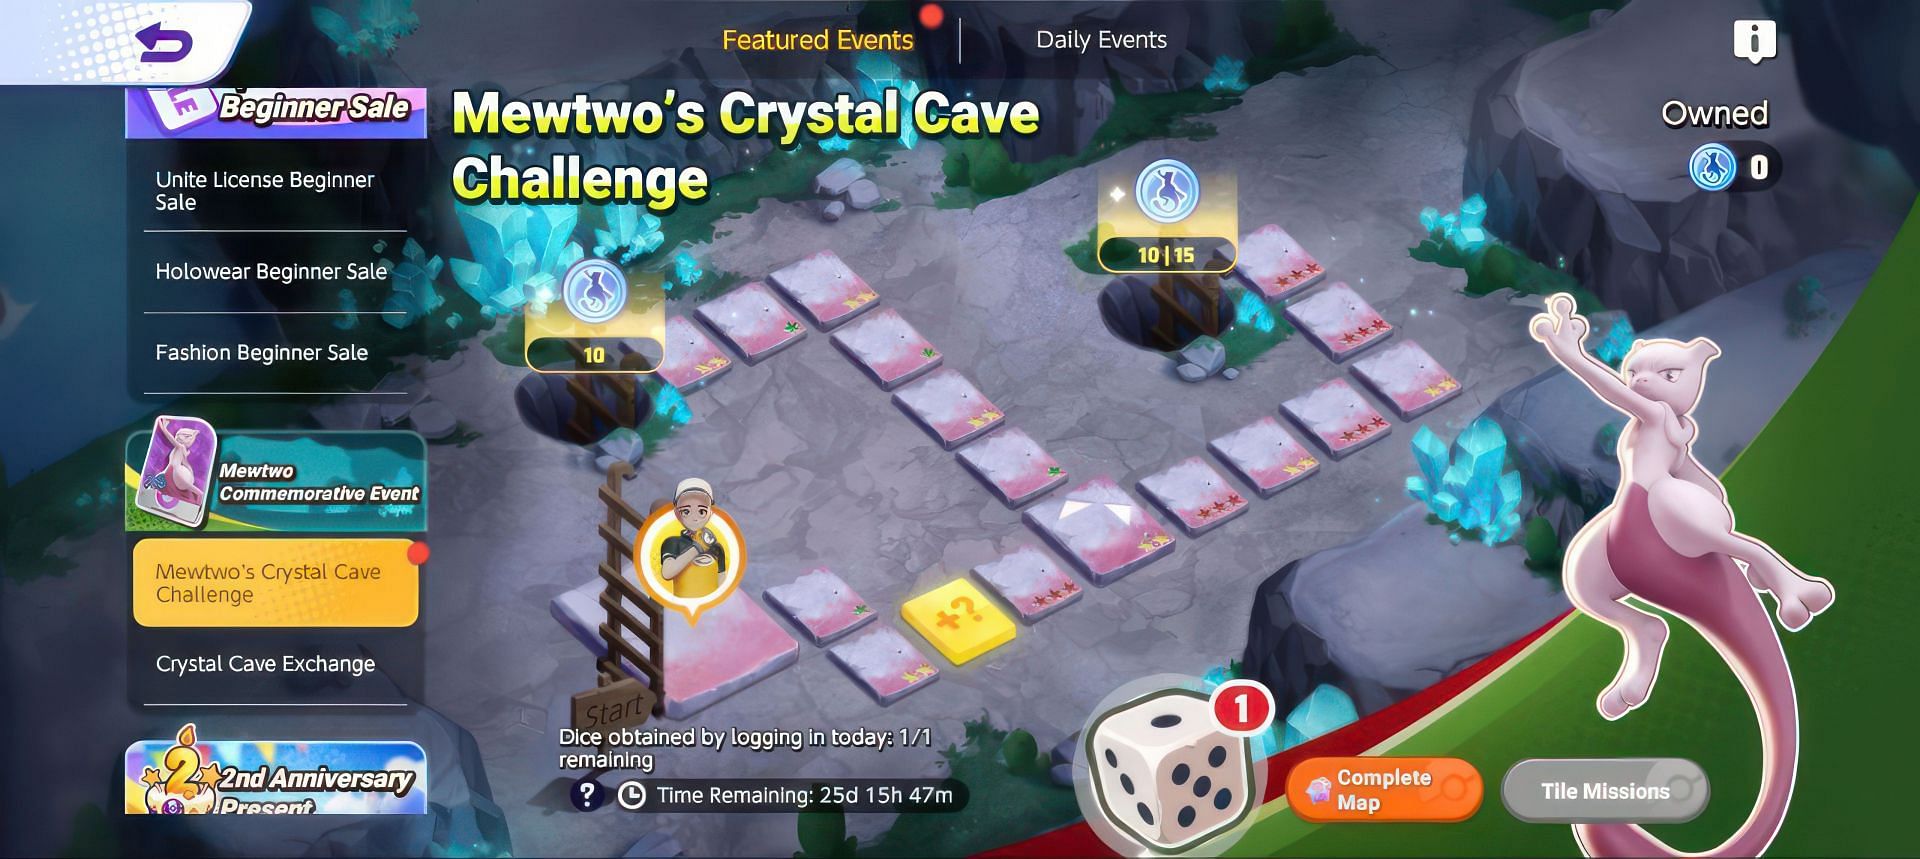 The Crystal Cave Challenge in Unite (Image via The Pokemon Company)